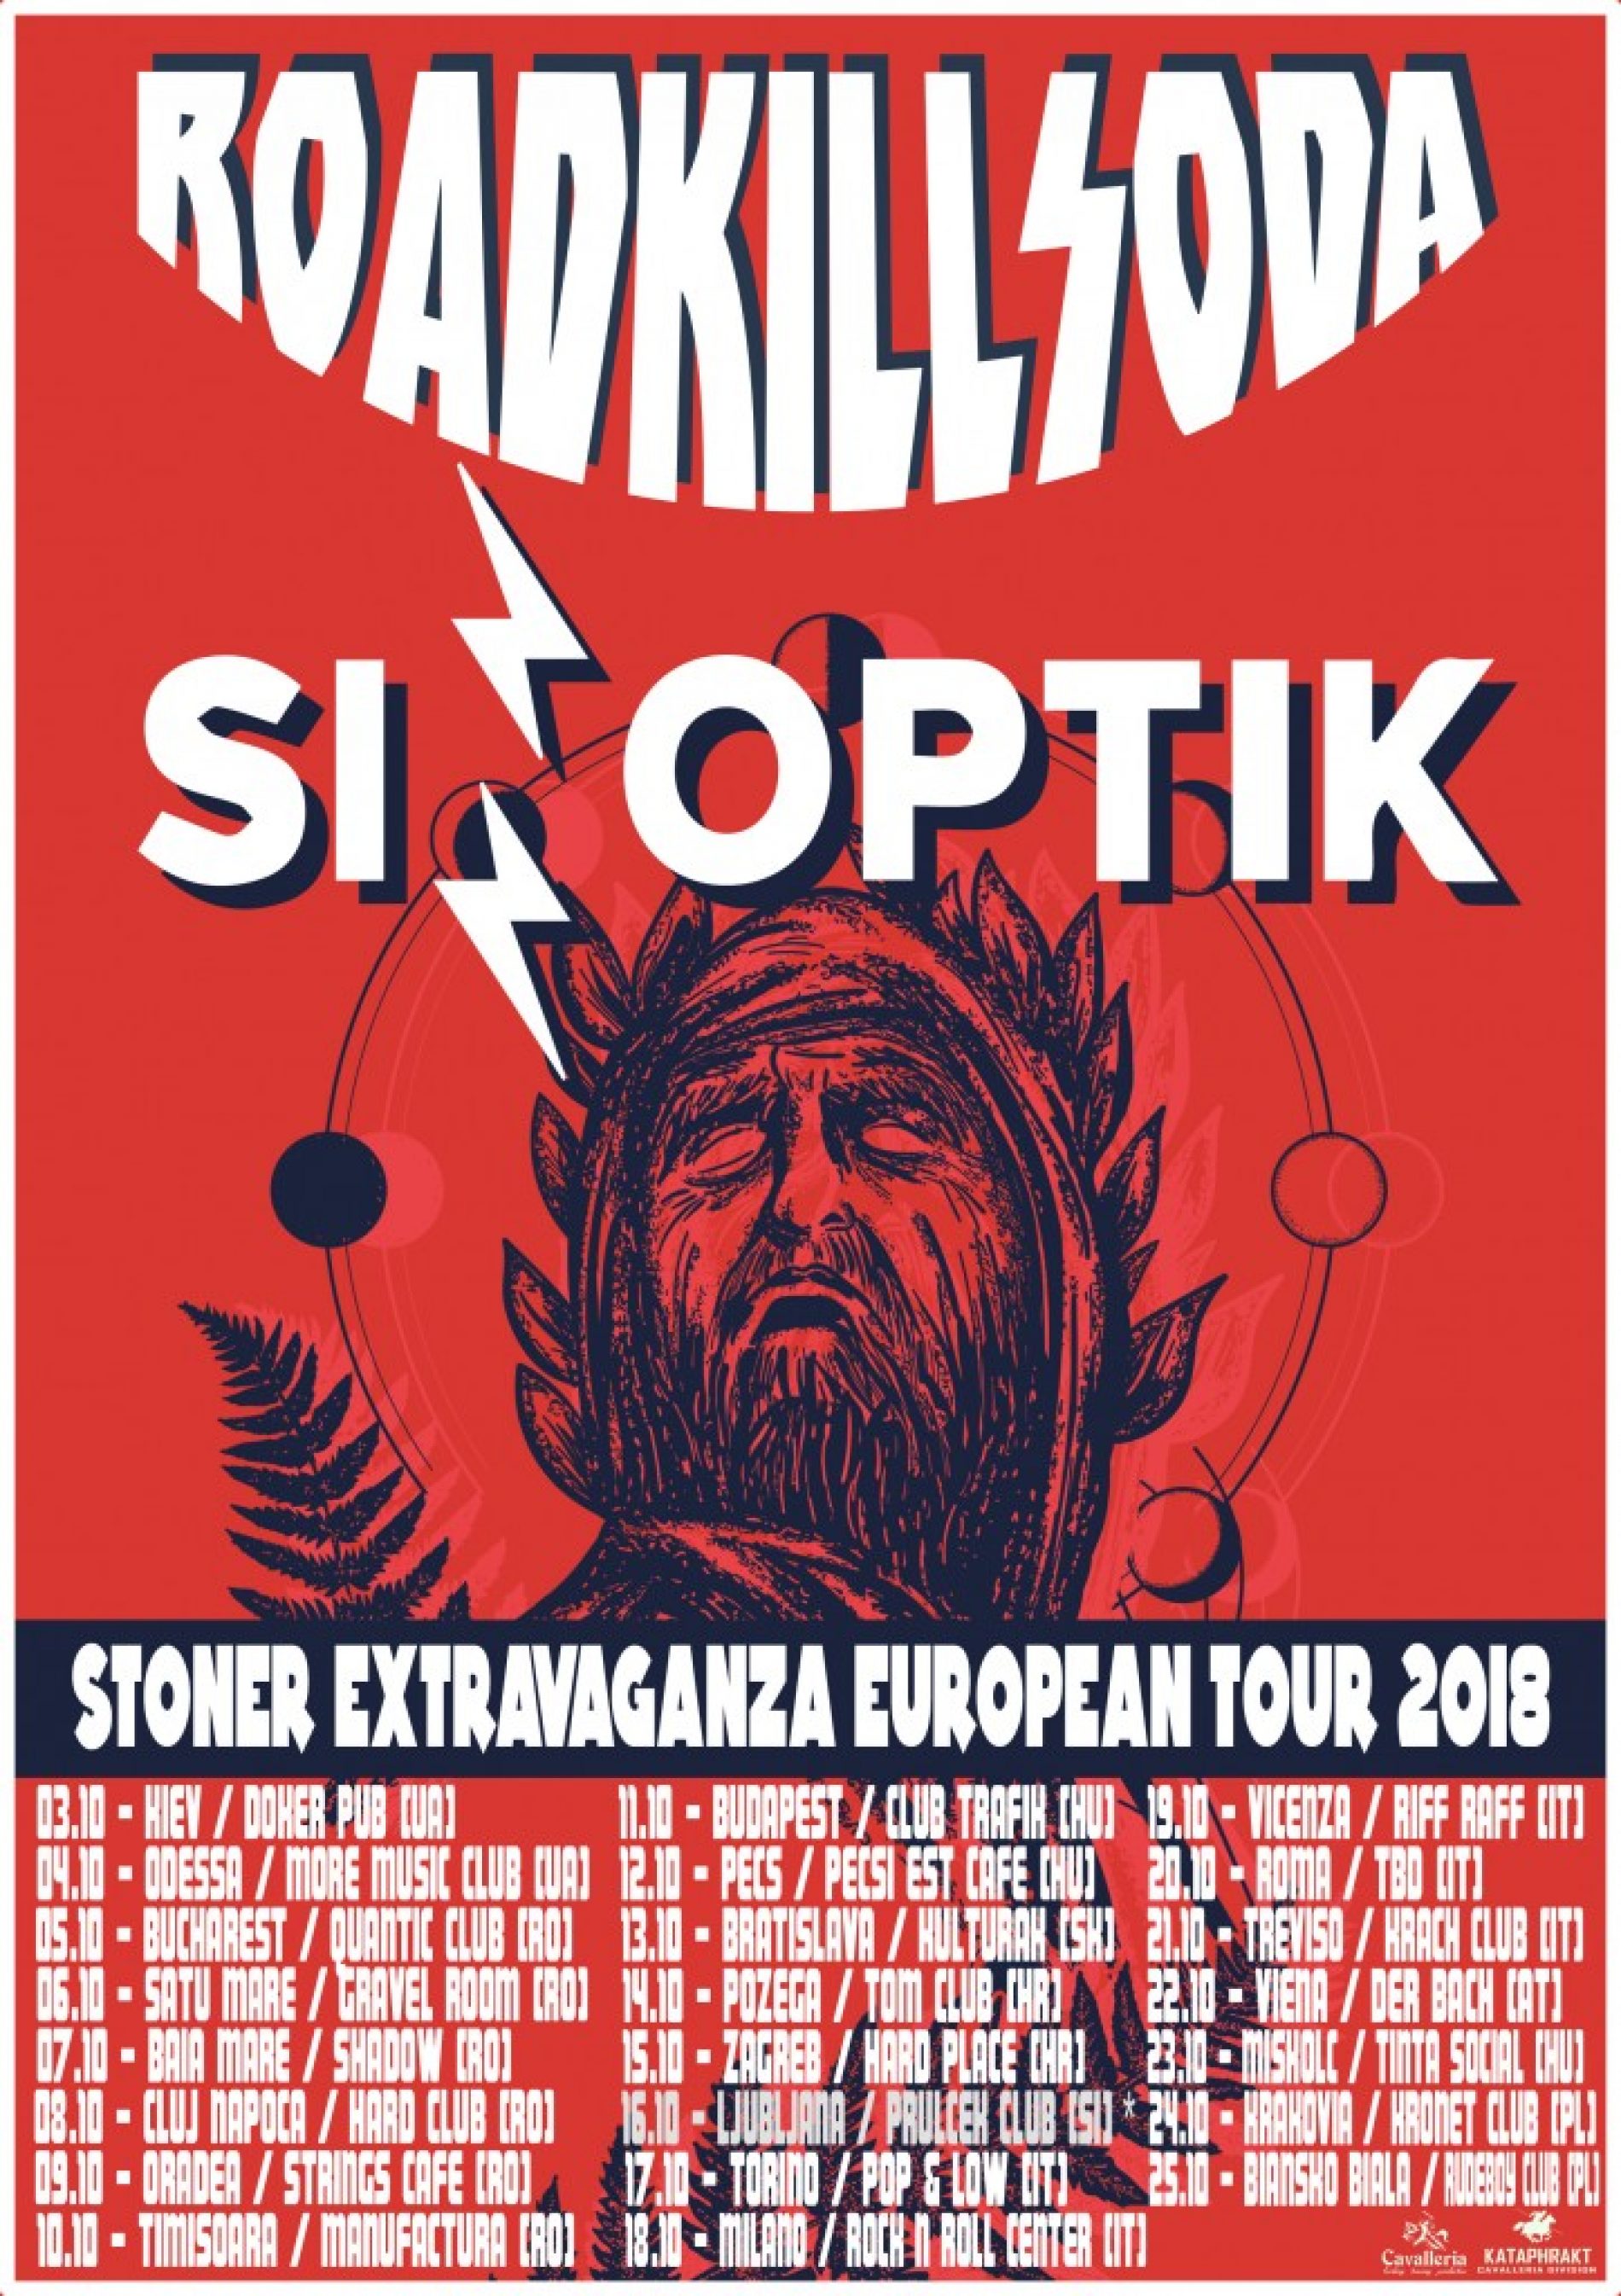 Roadkillsoda și Sinoptik anunță turneul Stoner Extravaganza European Tour 2018